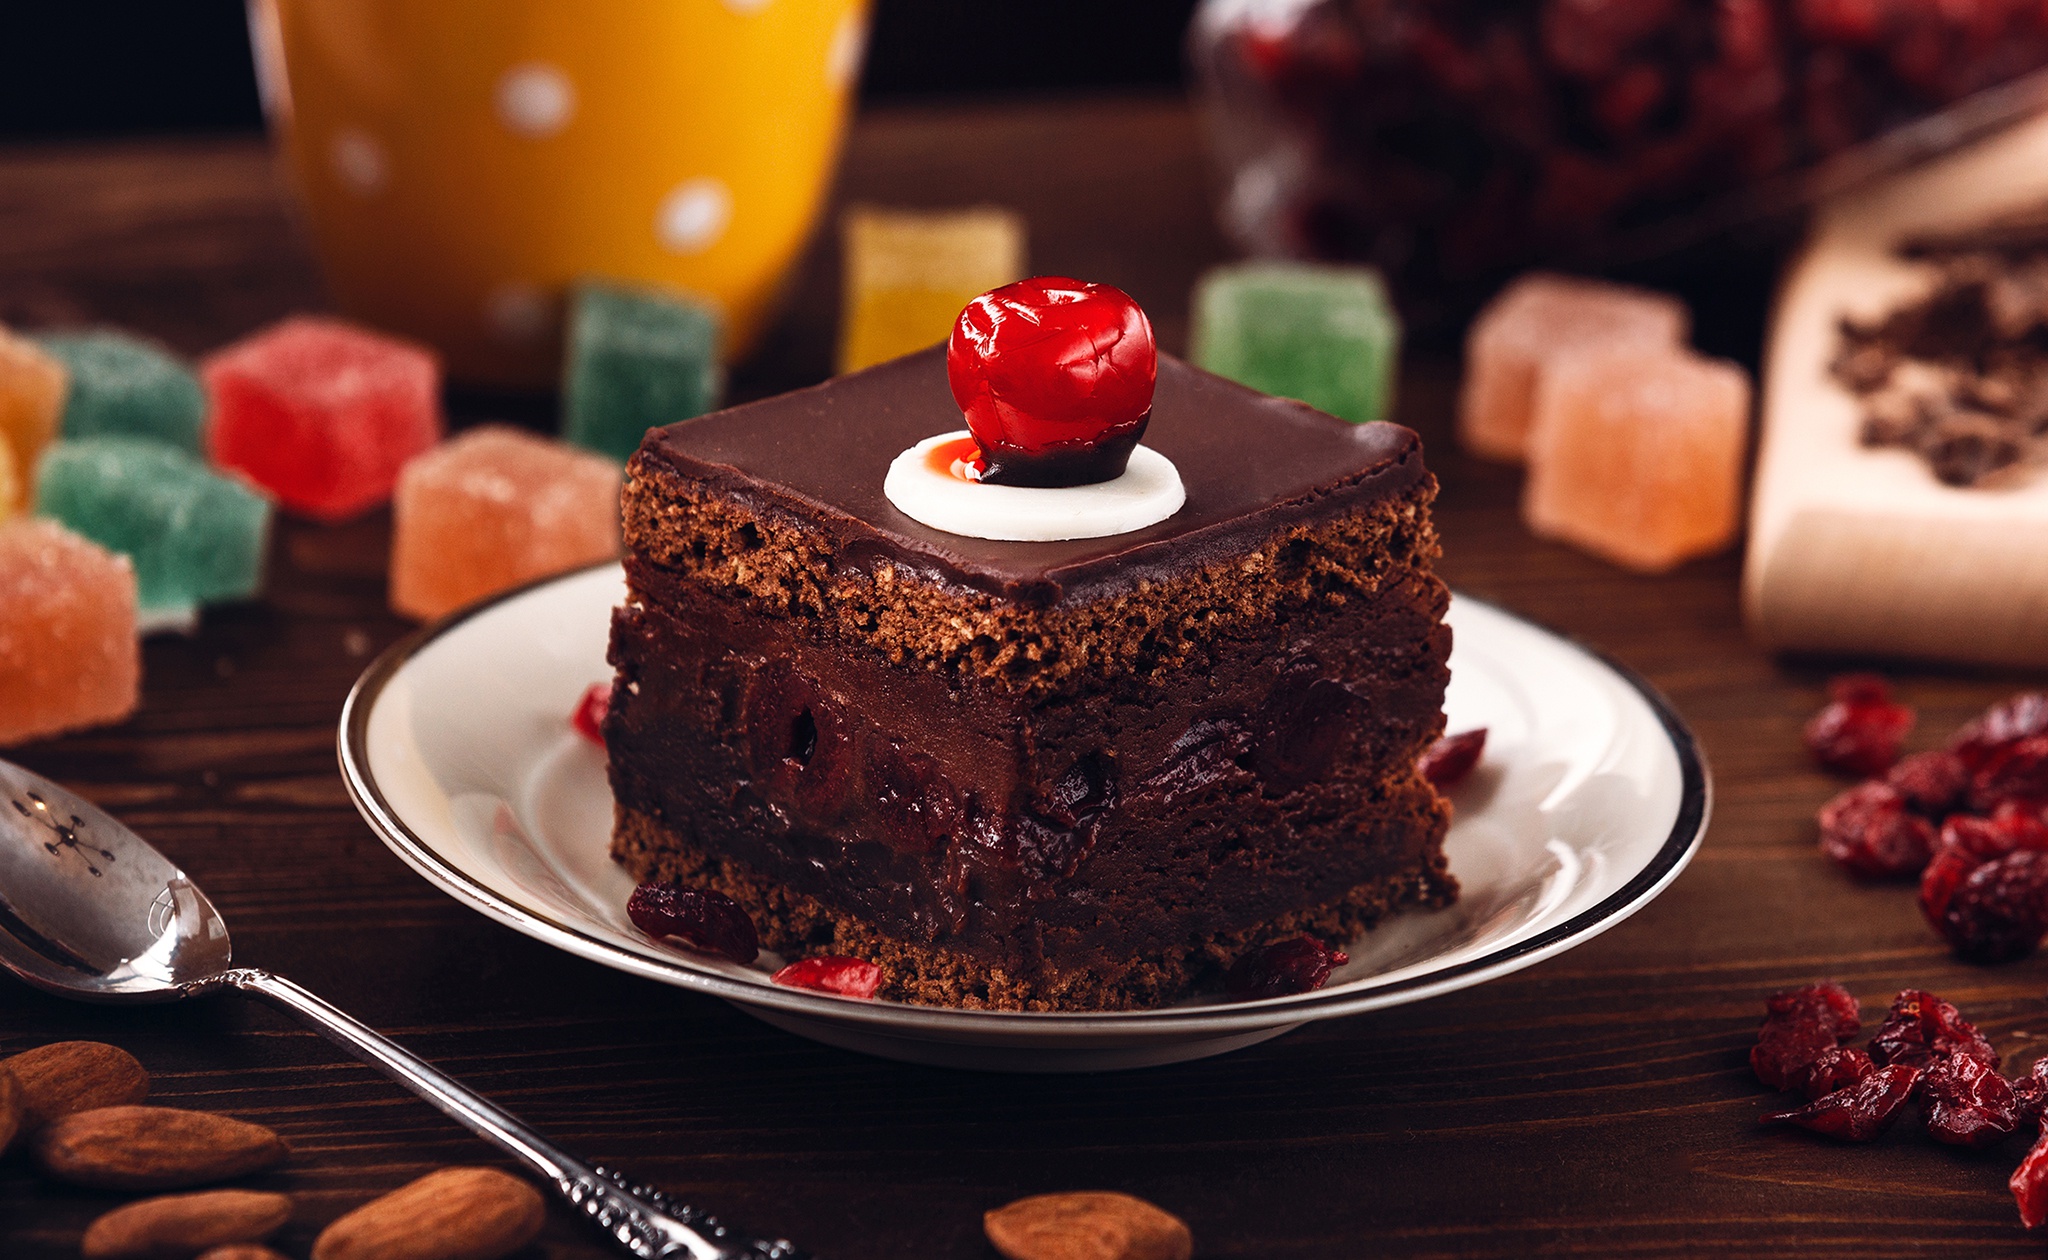 196 Hight Cake Images, Stock Photos & Vectors | Shutterstock